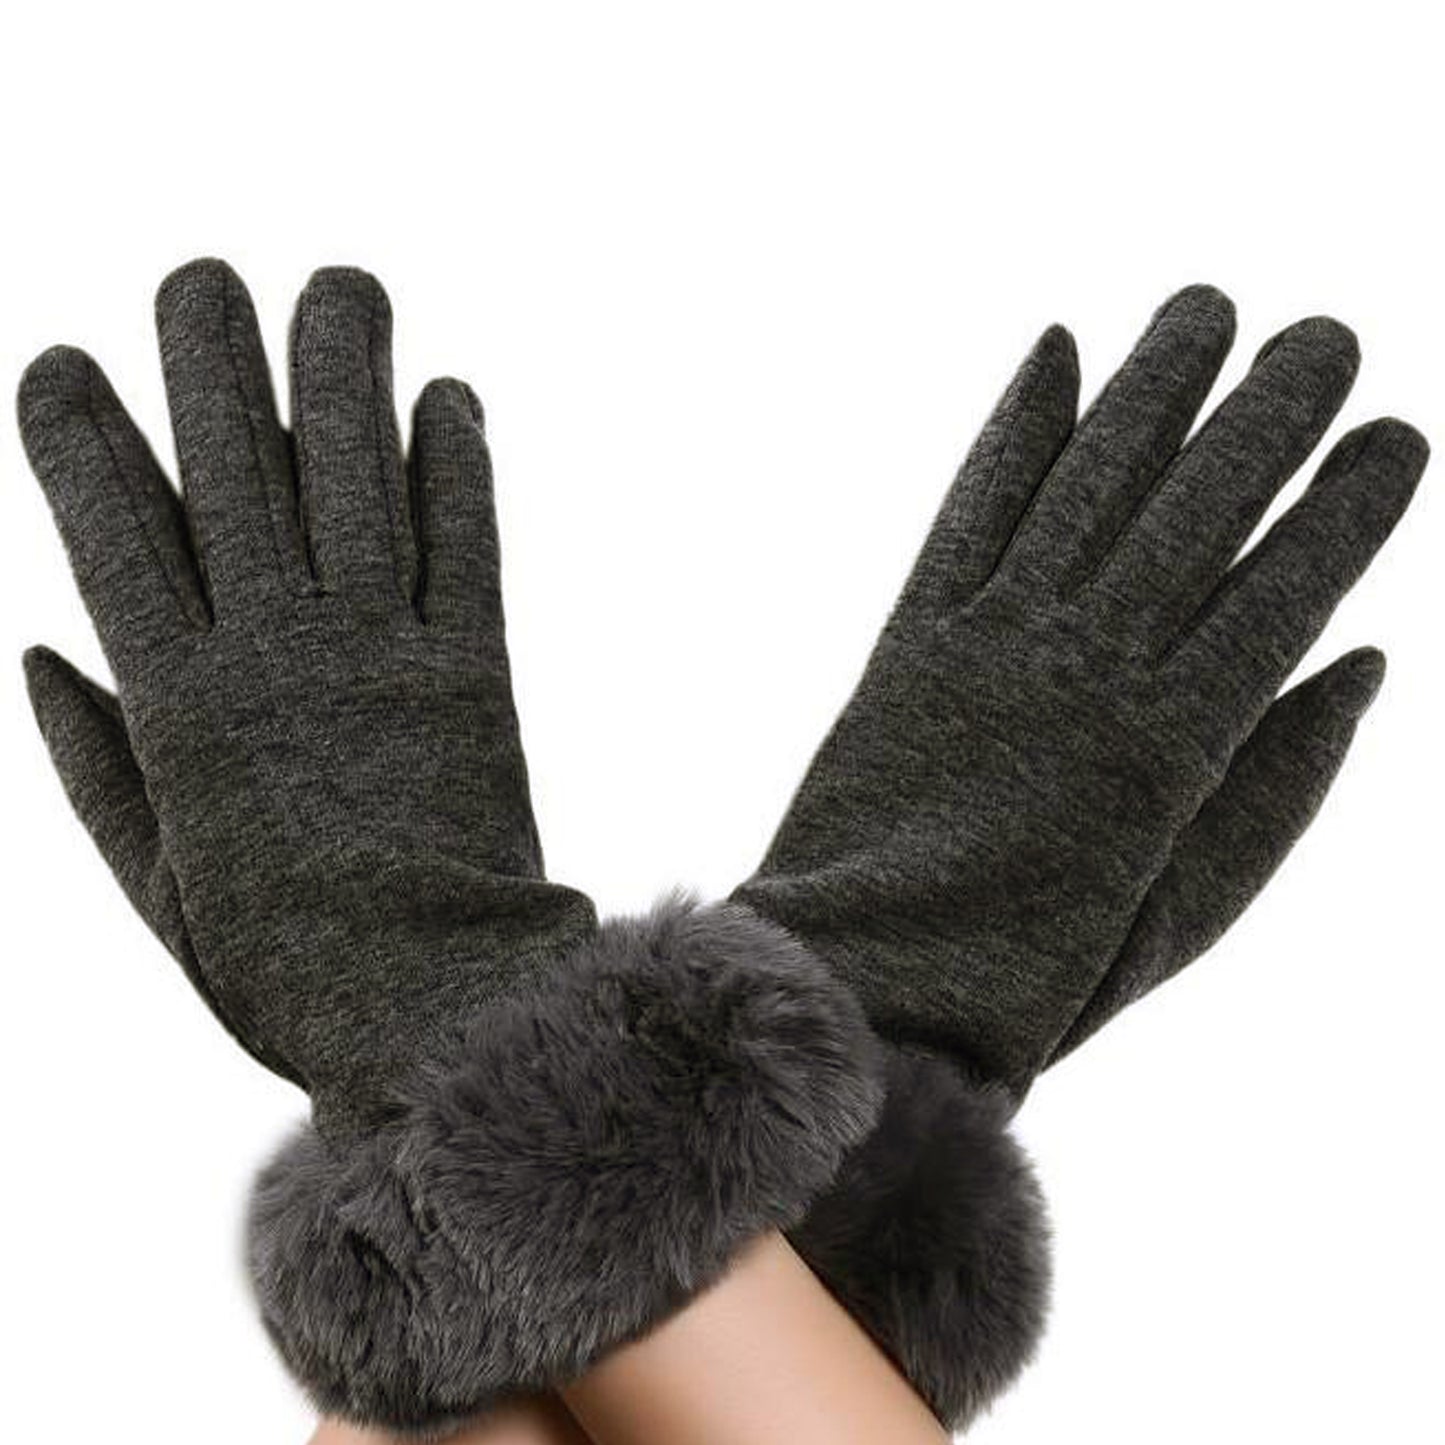 Zimné rukavice z umelej kožušiny, kompatibilné s dotykovou obrazovkou, Tmavo sivé